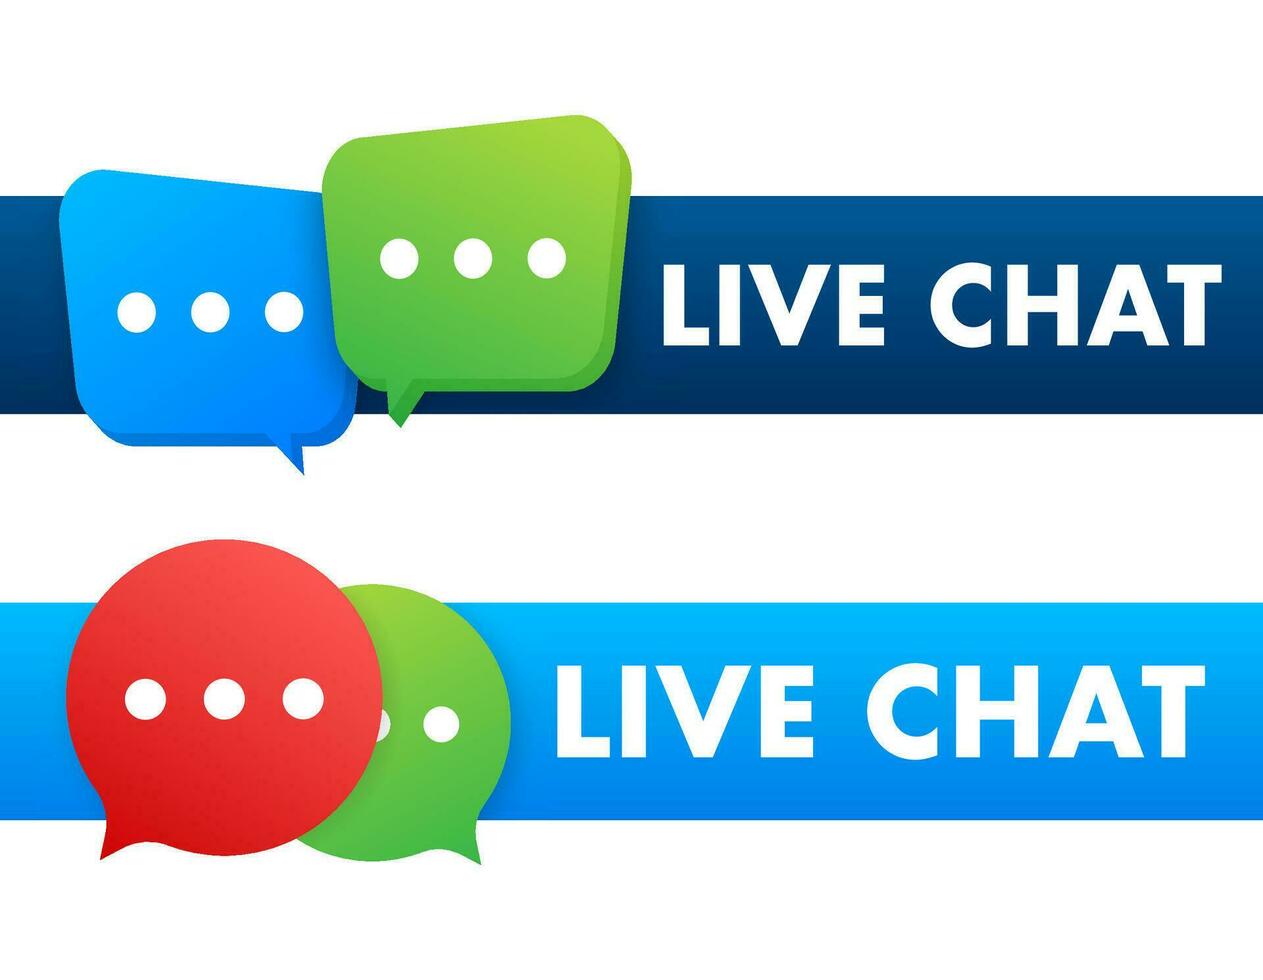 live chat. Support service. Live communication. Vector stock illustration